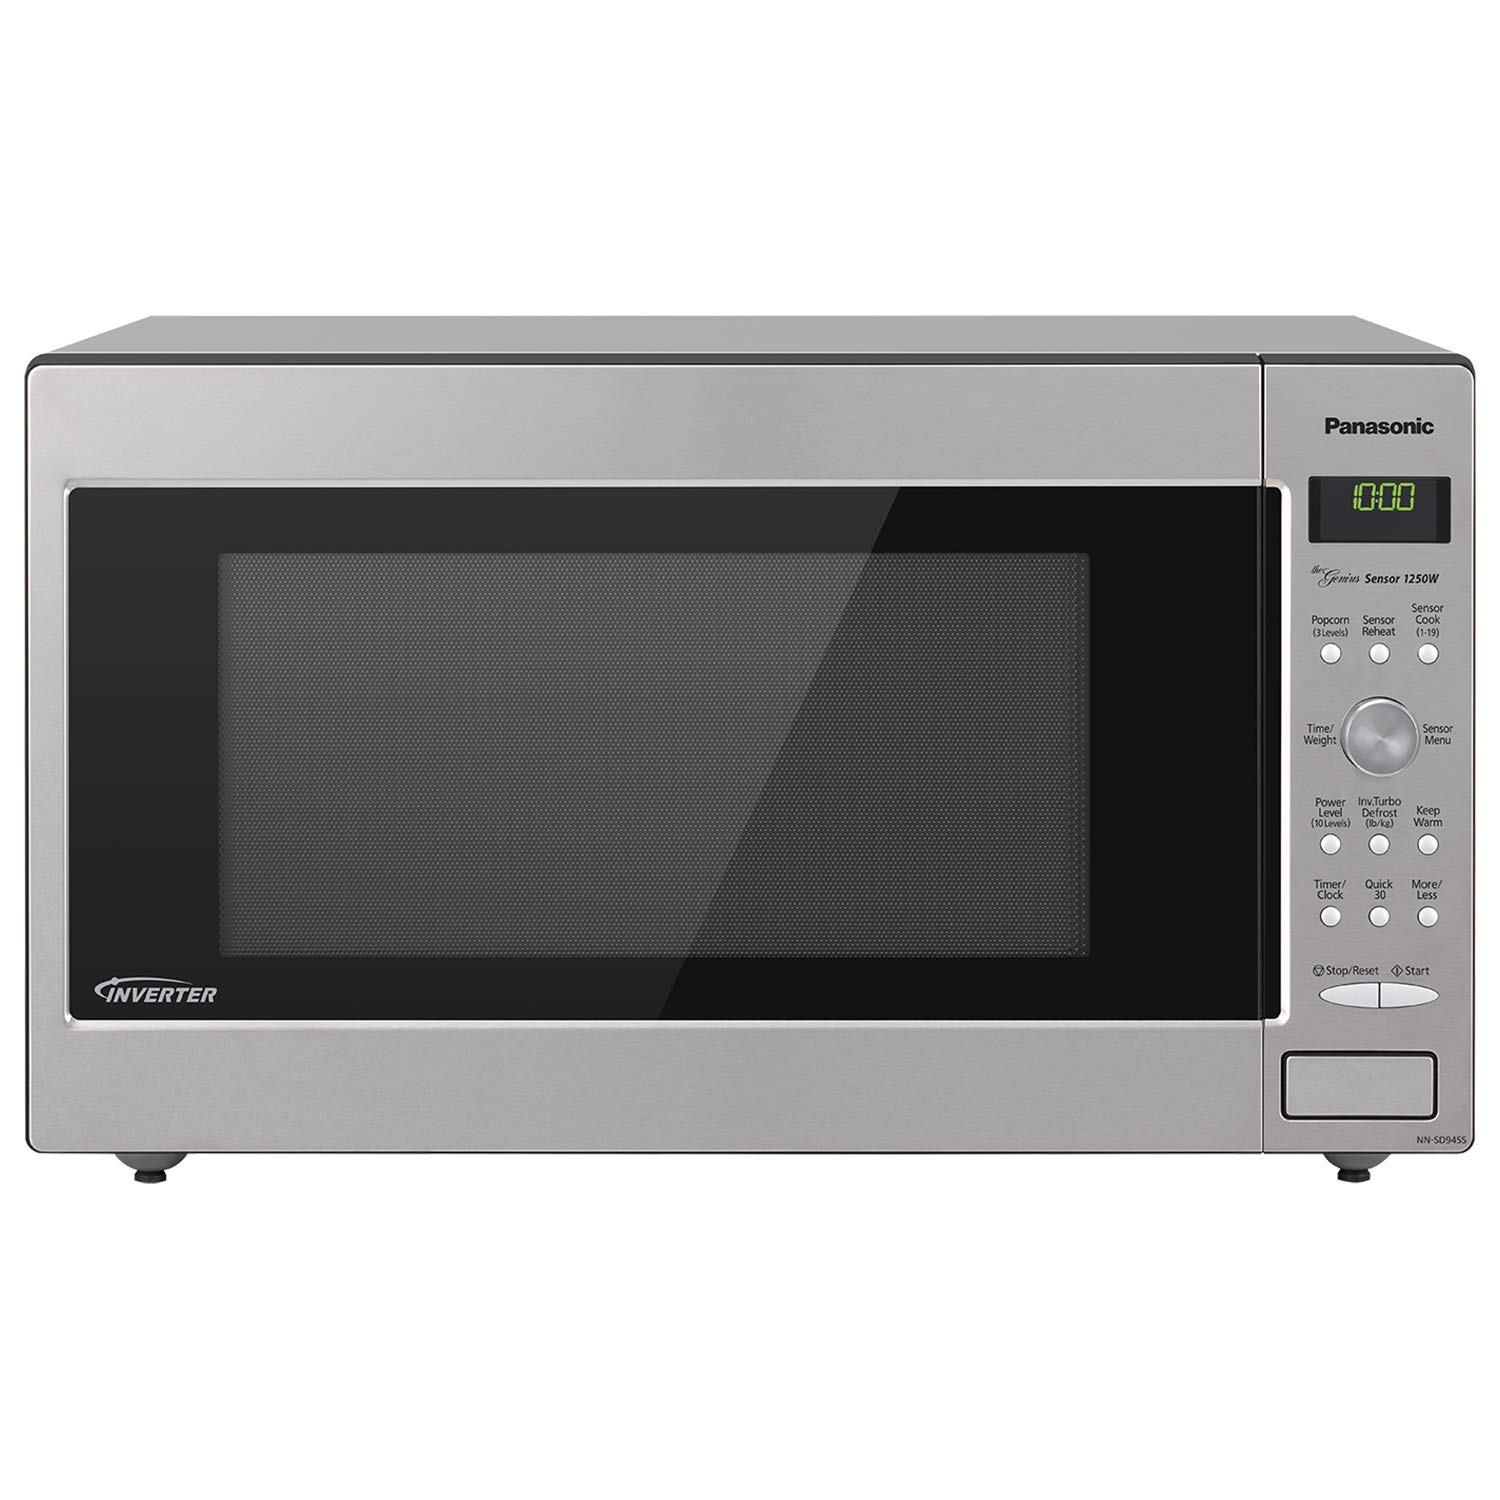 Panasonic NN-SD945S Inverter Technology Microwave Oven